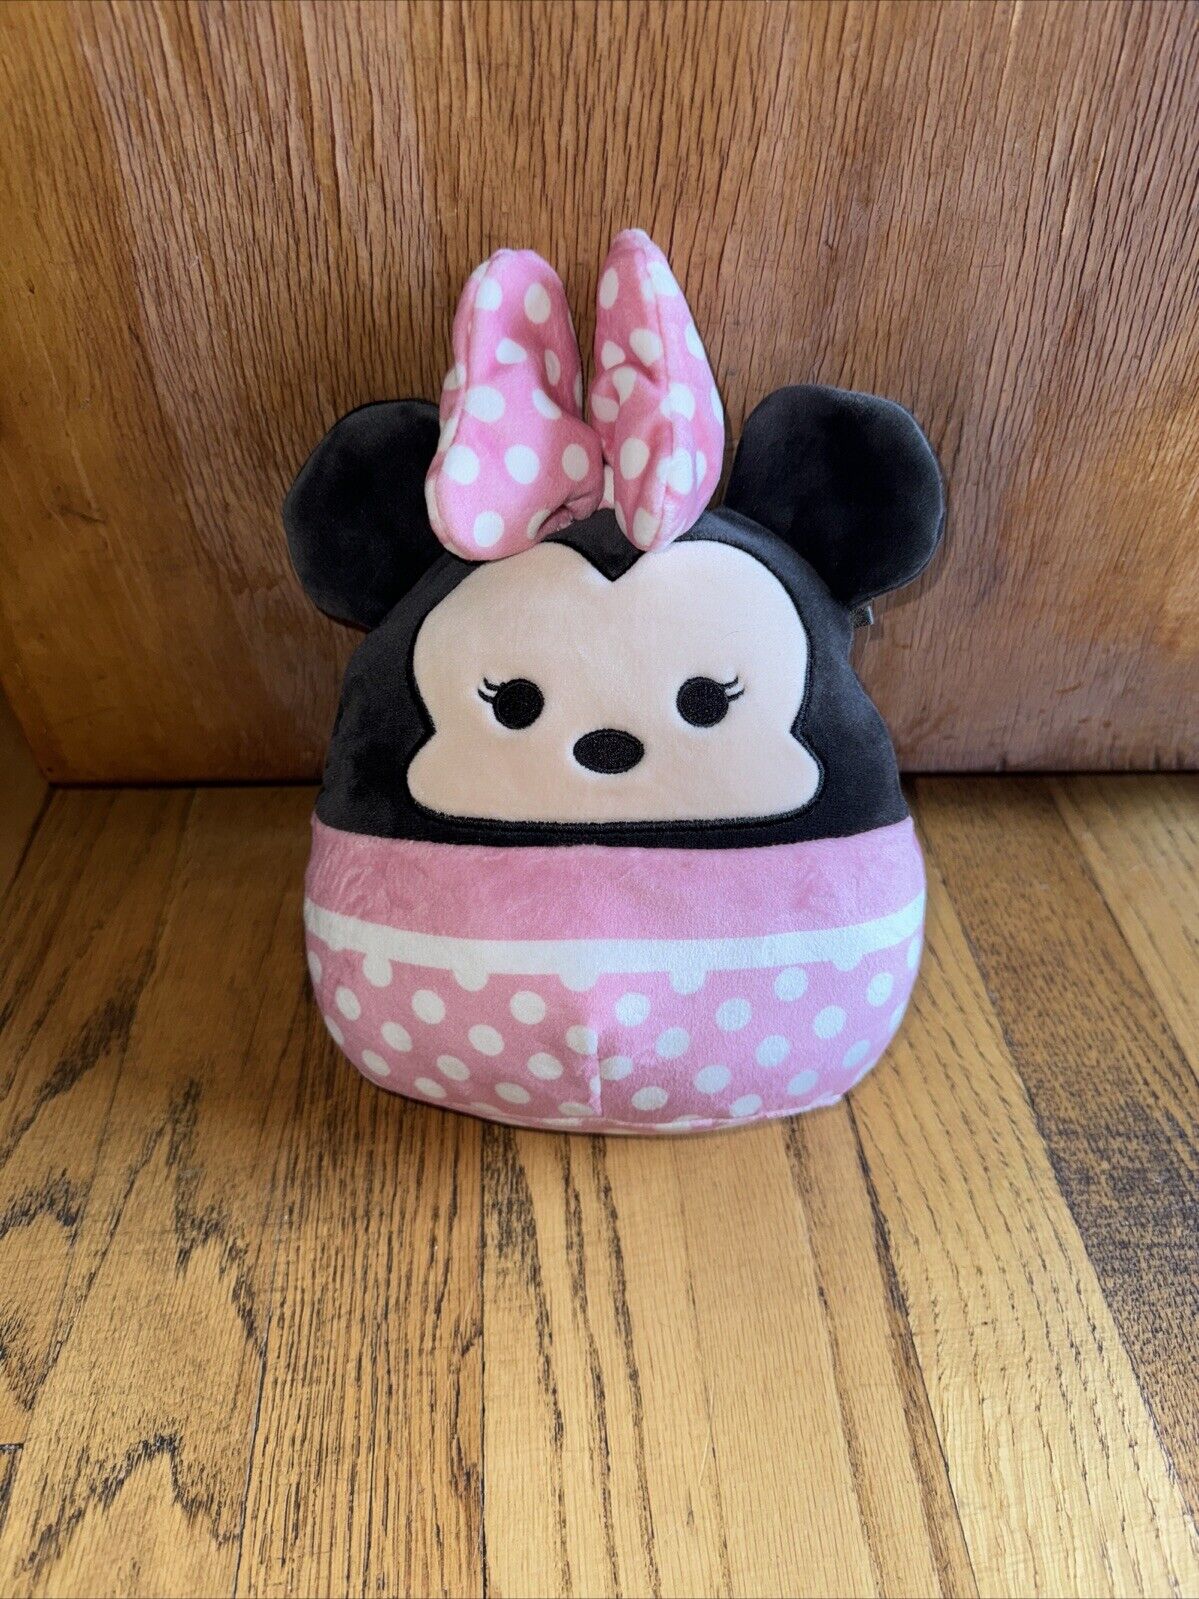 Disney Squishmallows Minnie Mouse Plush Stuffed Animal Toy